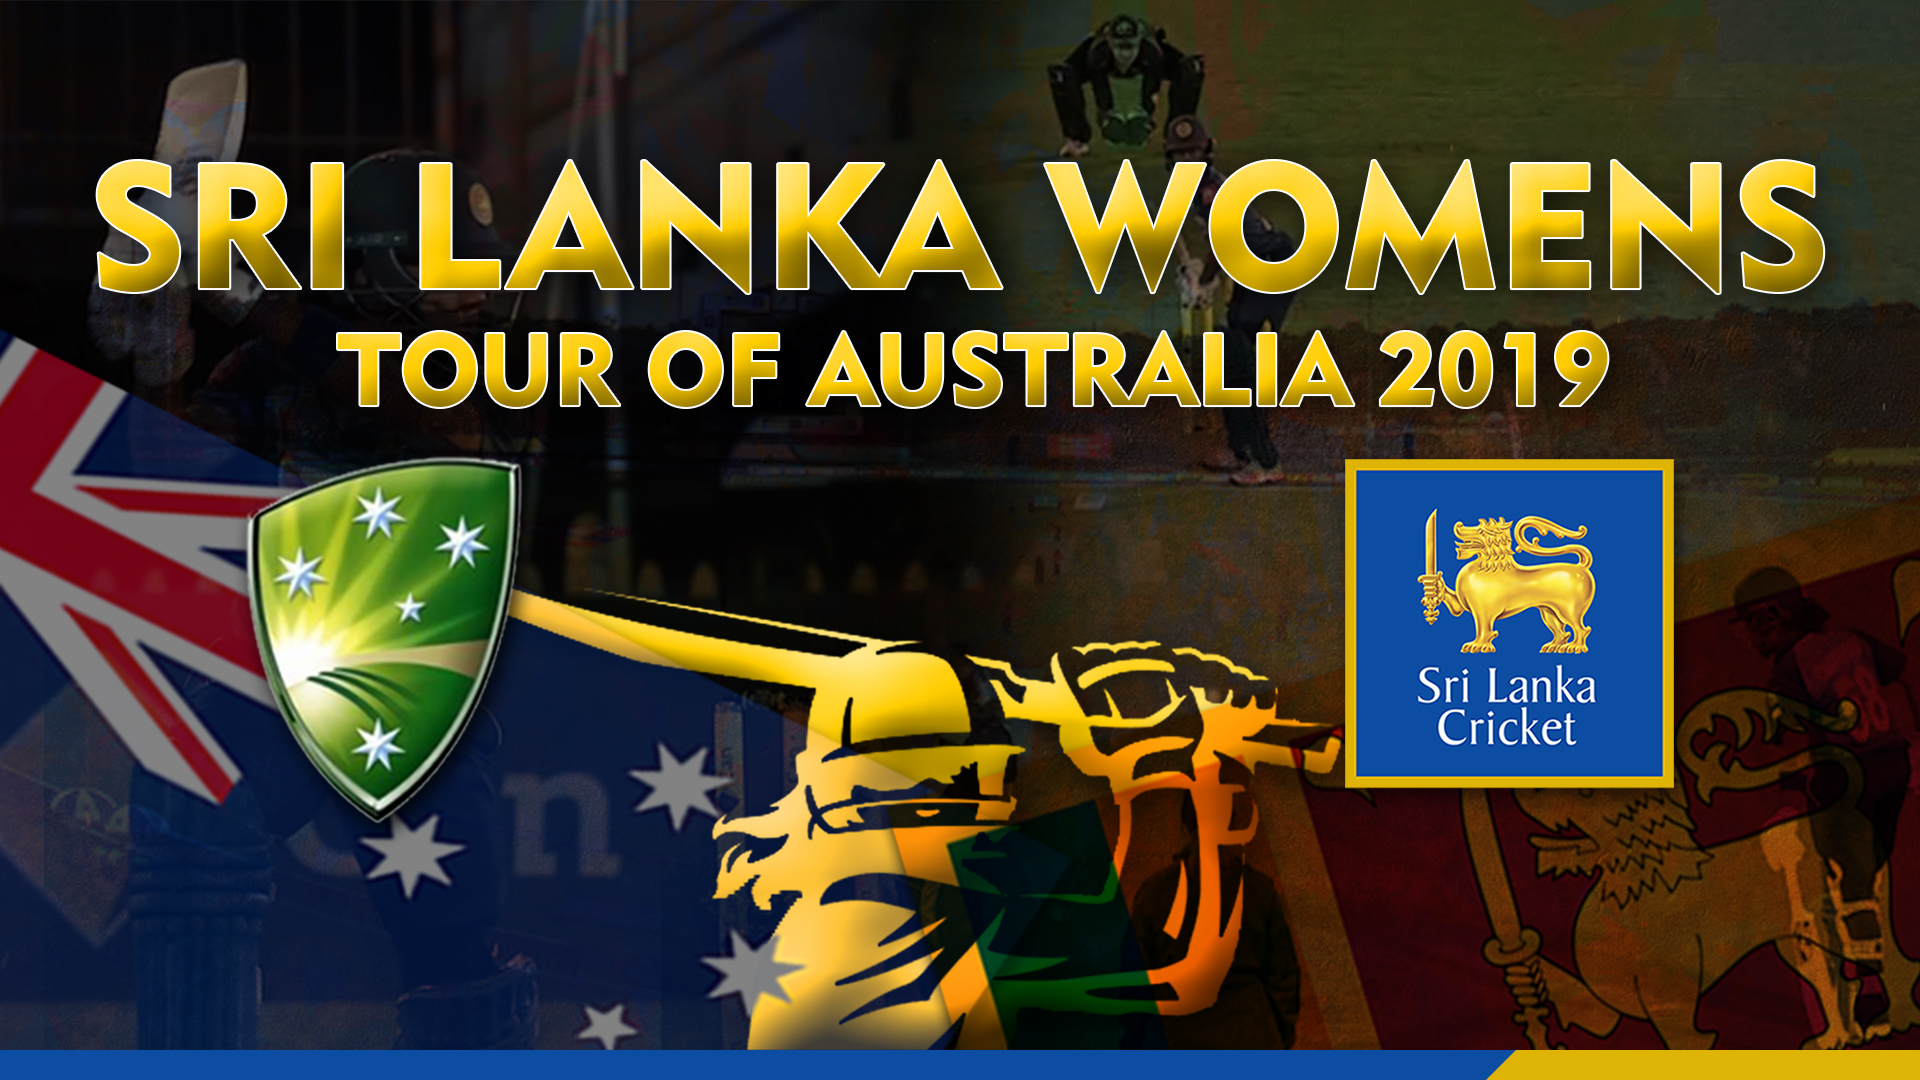 Chamari Atapattu blasts 113 in lone battle as Australia Women win T20 opener by 41